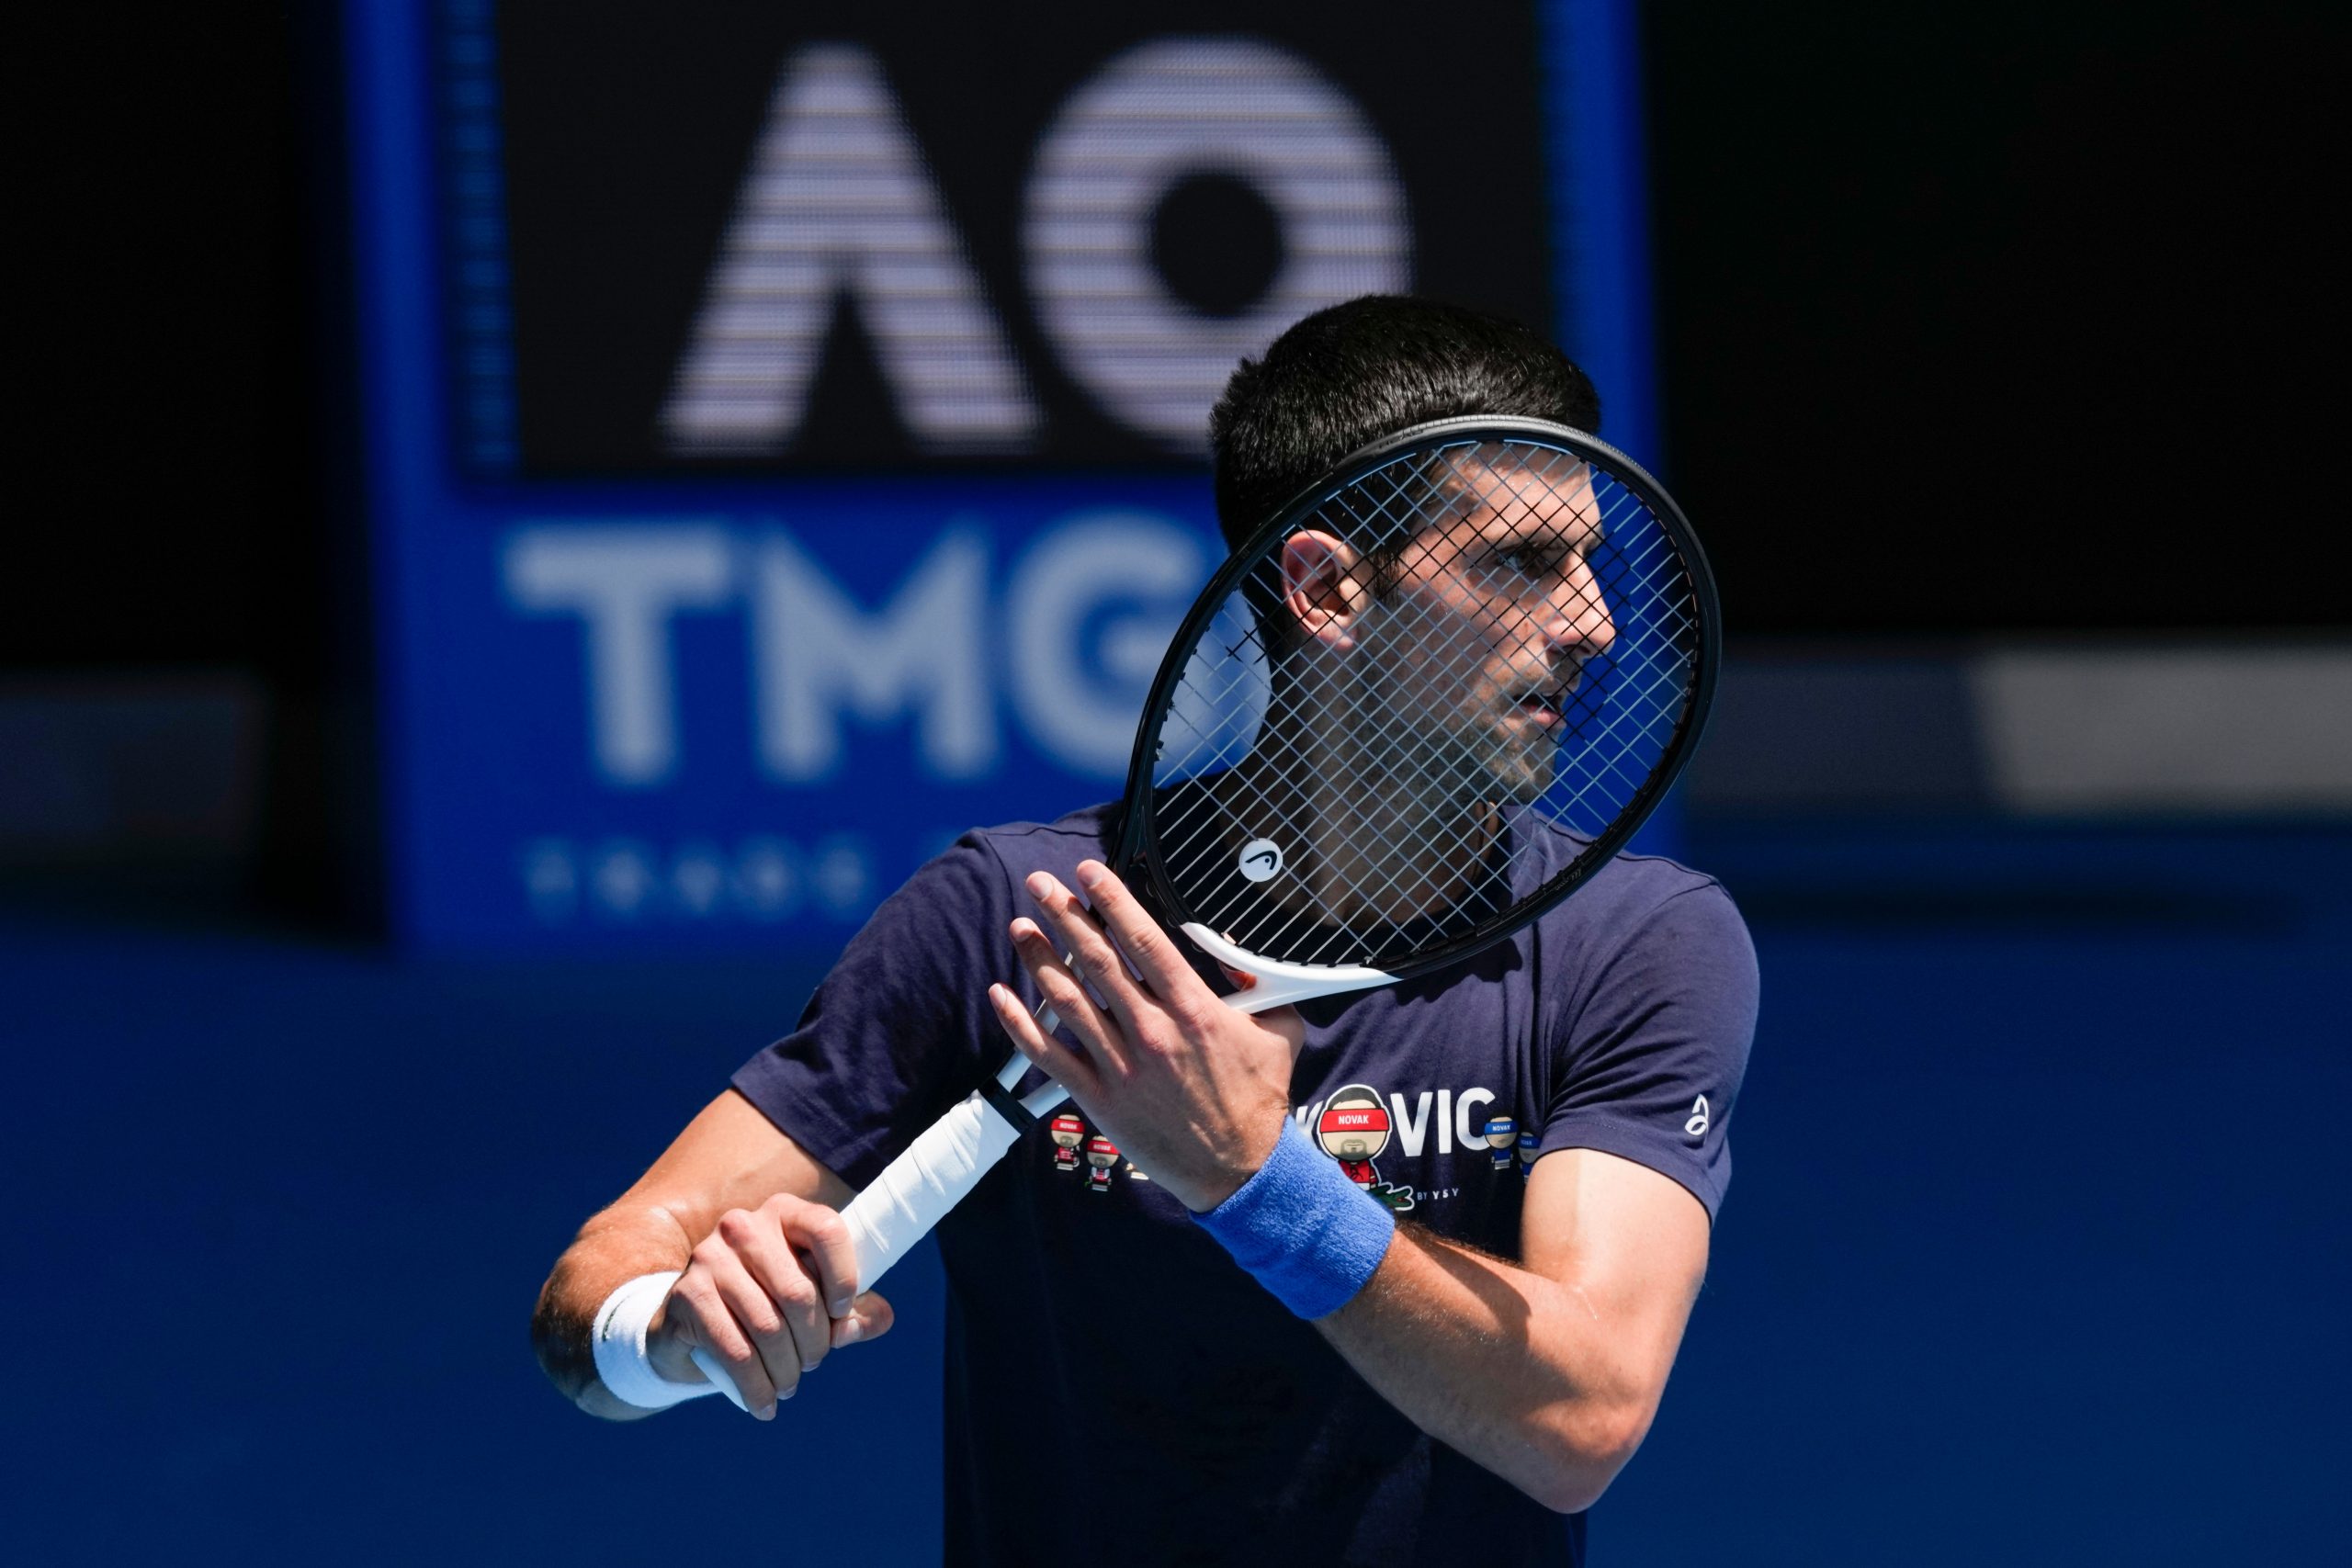 Novak Djokovic dethroned as world No 1 by Daniil Medvedev post loss in Dubai